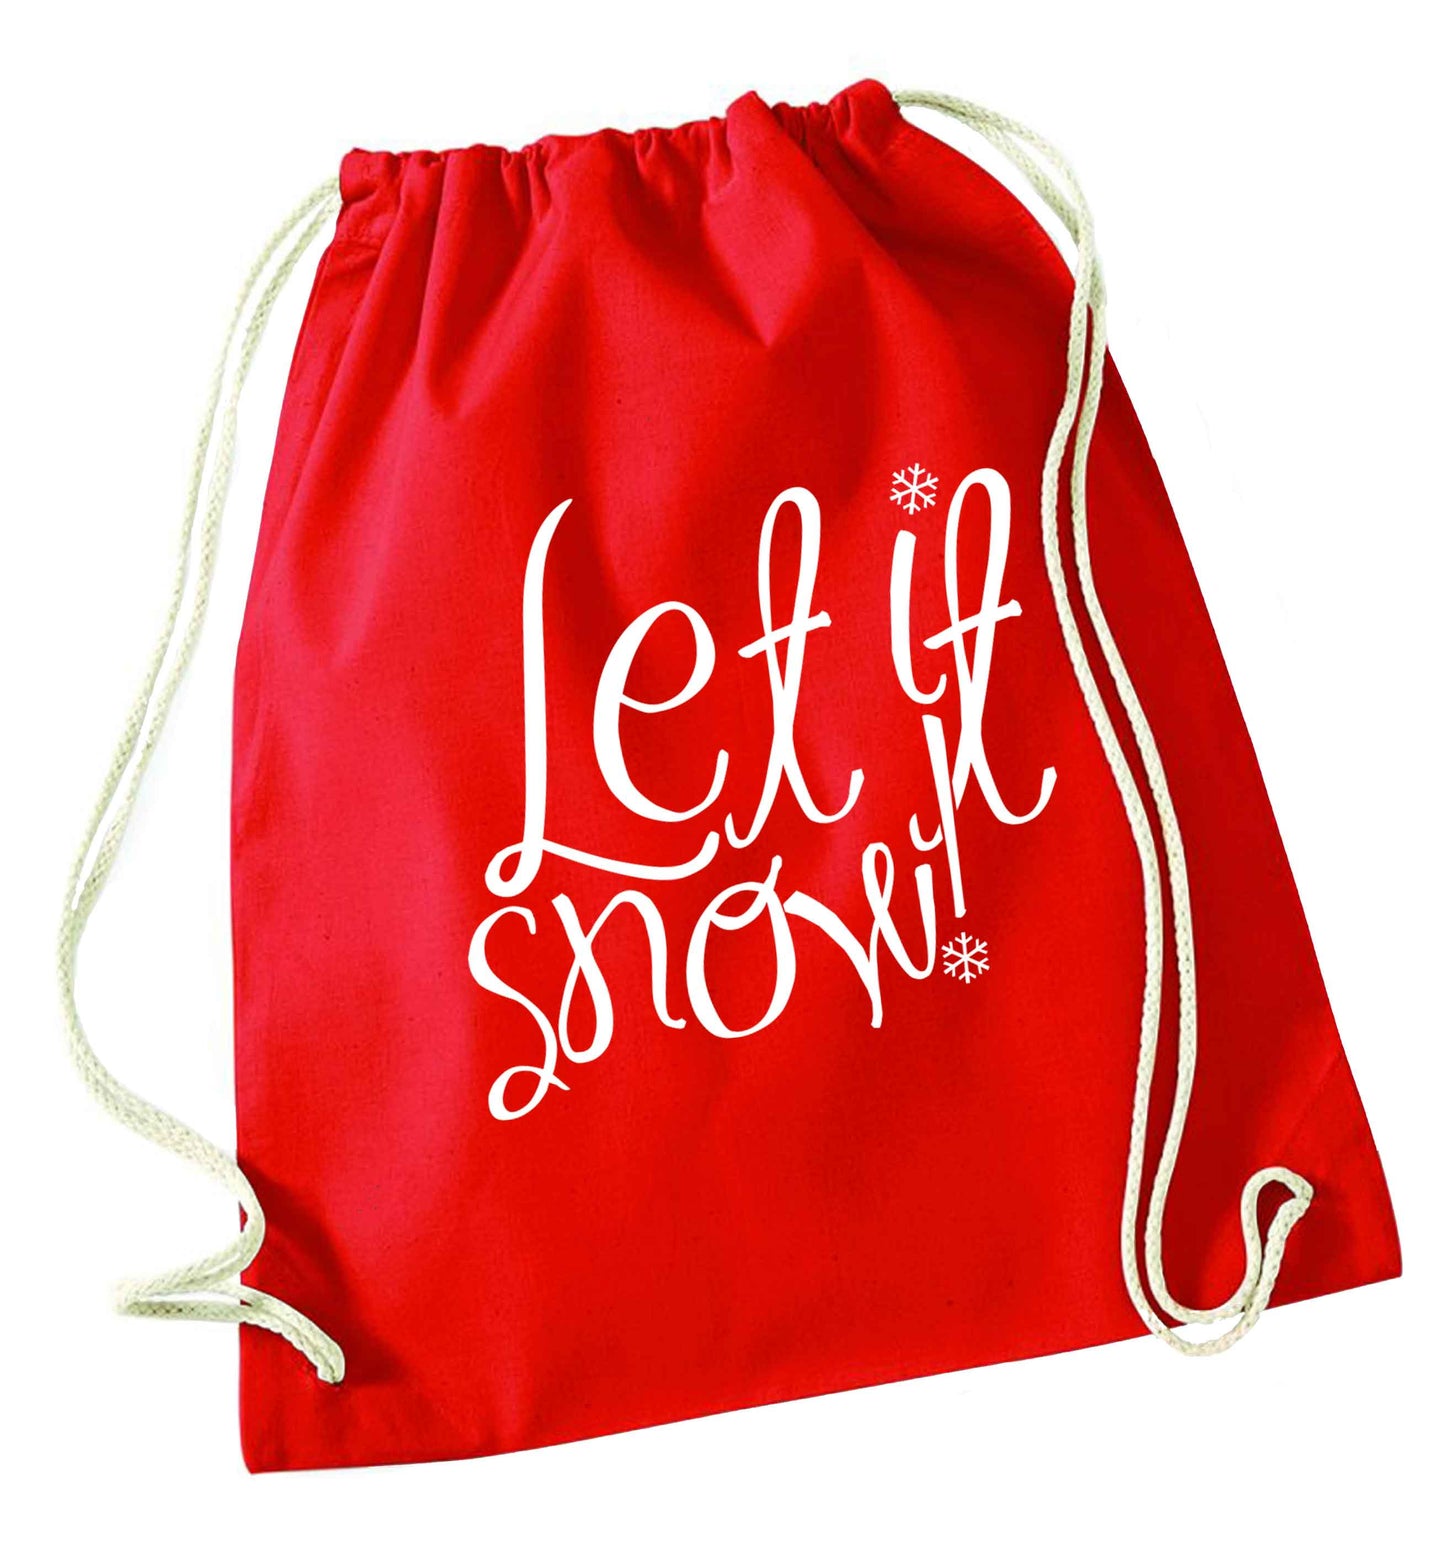 Let it snow red drawstring bag 